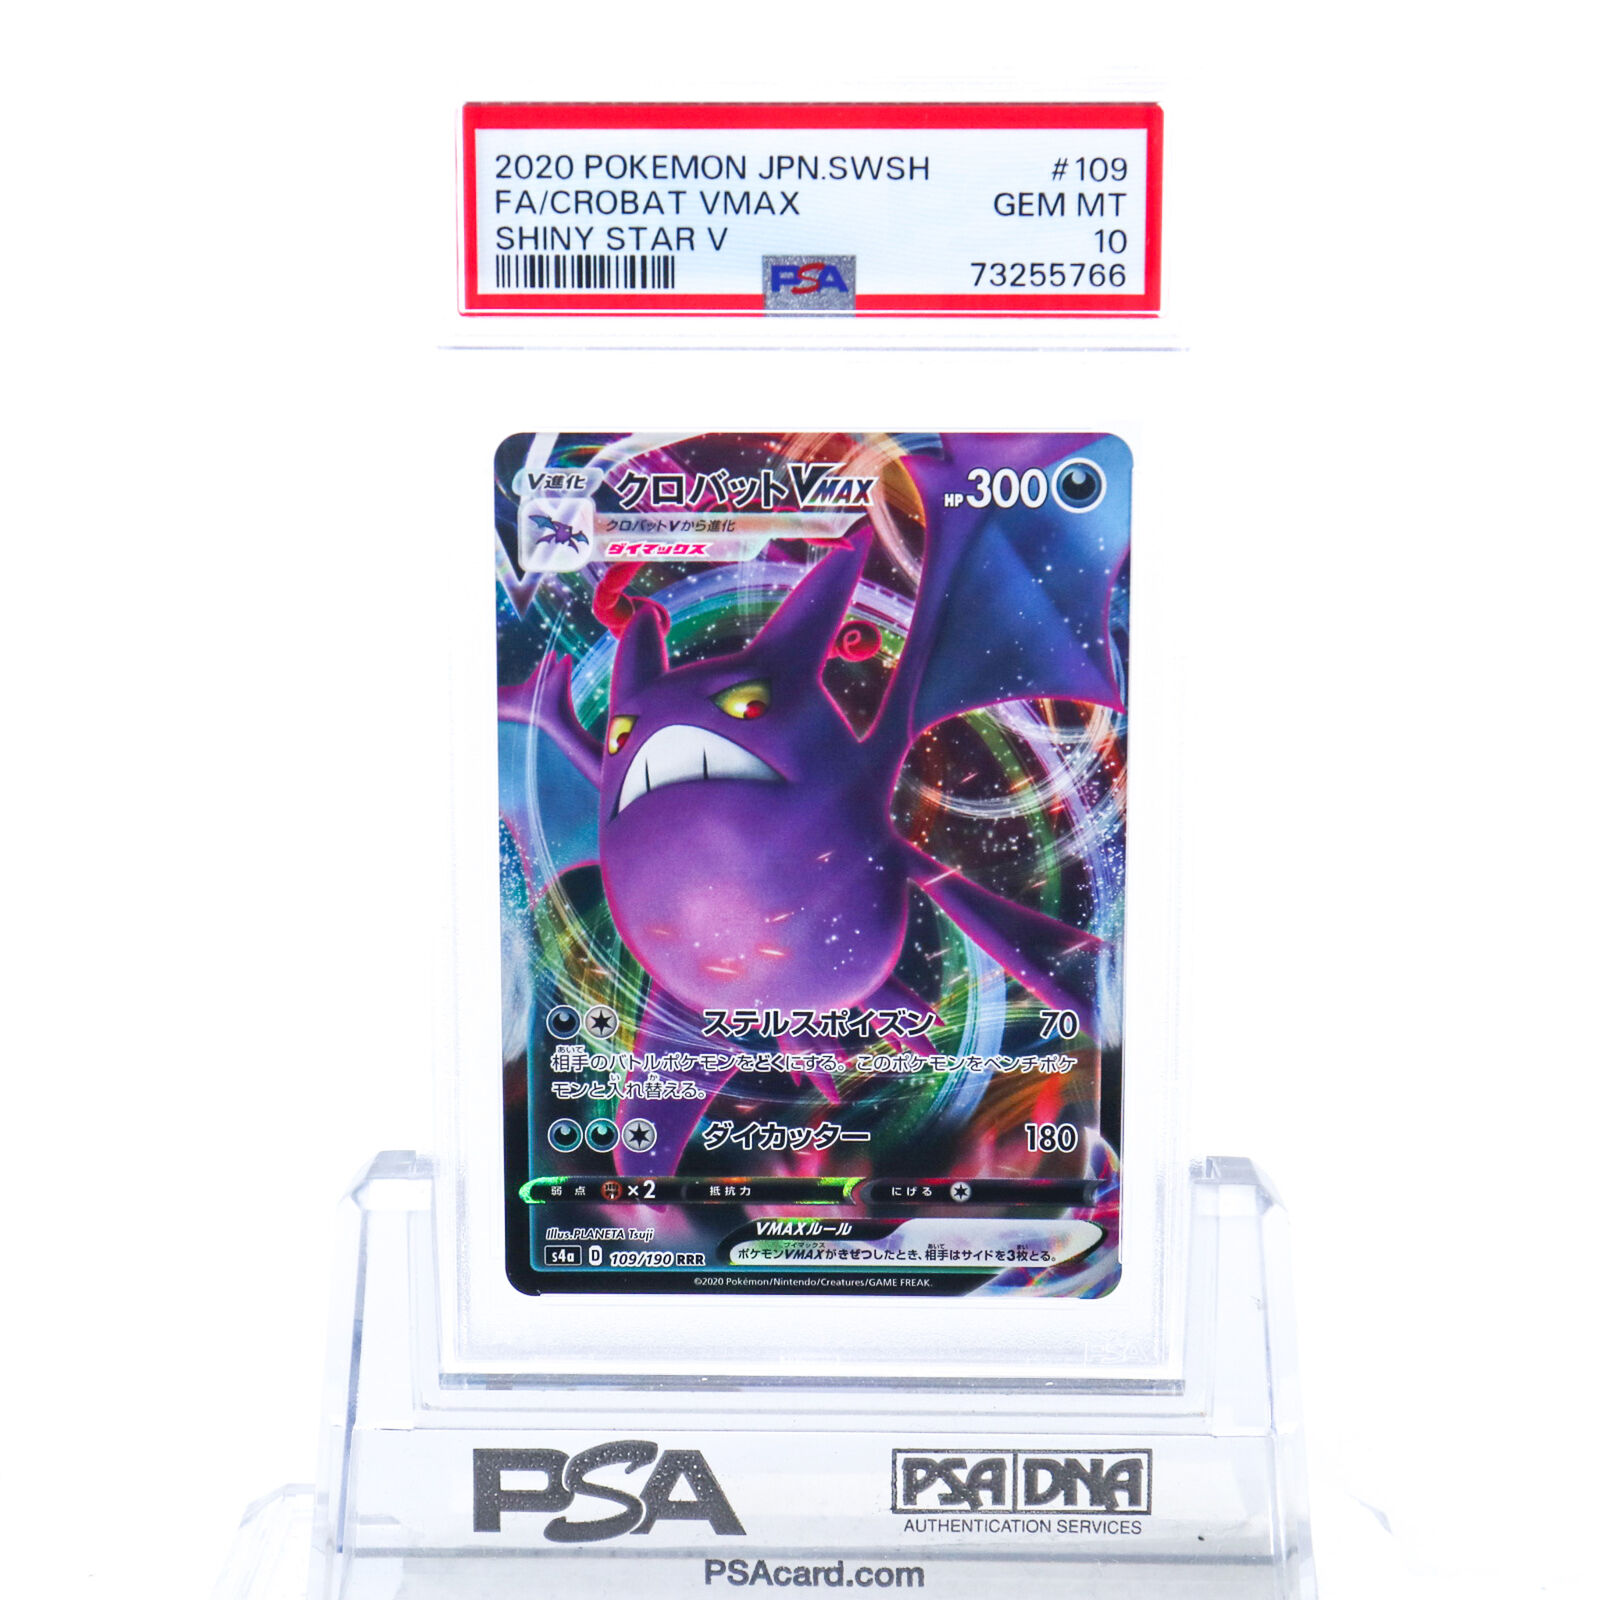 PSA10 Pokemon Japanese Sword & Shield Shiny Star V 109 Full Art/Crobat Vmax